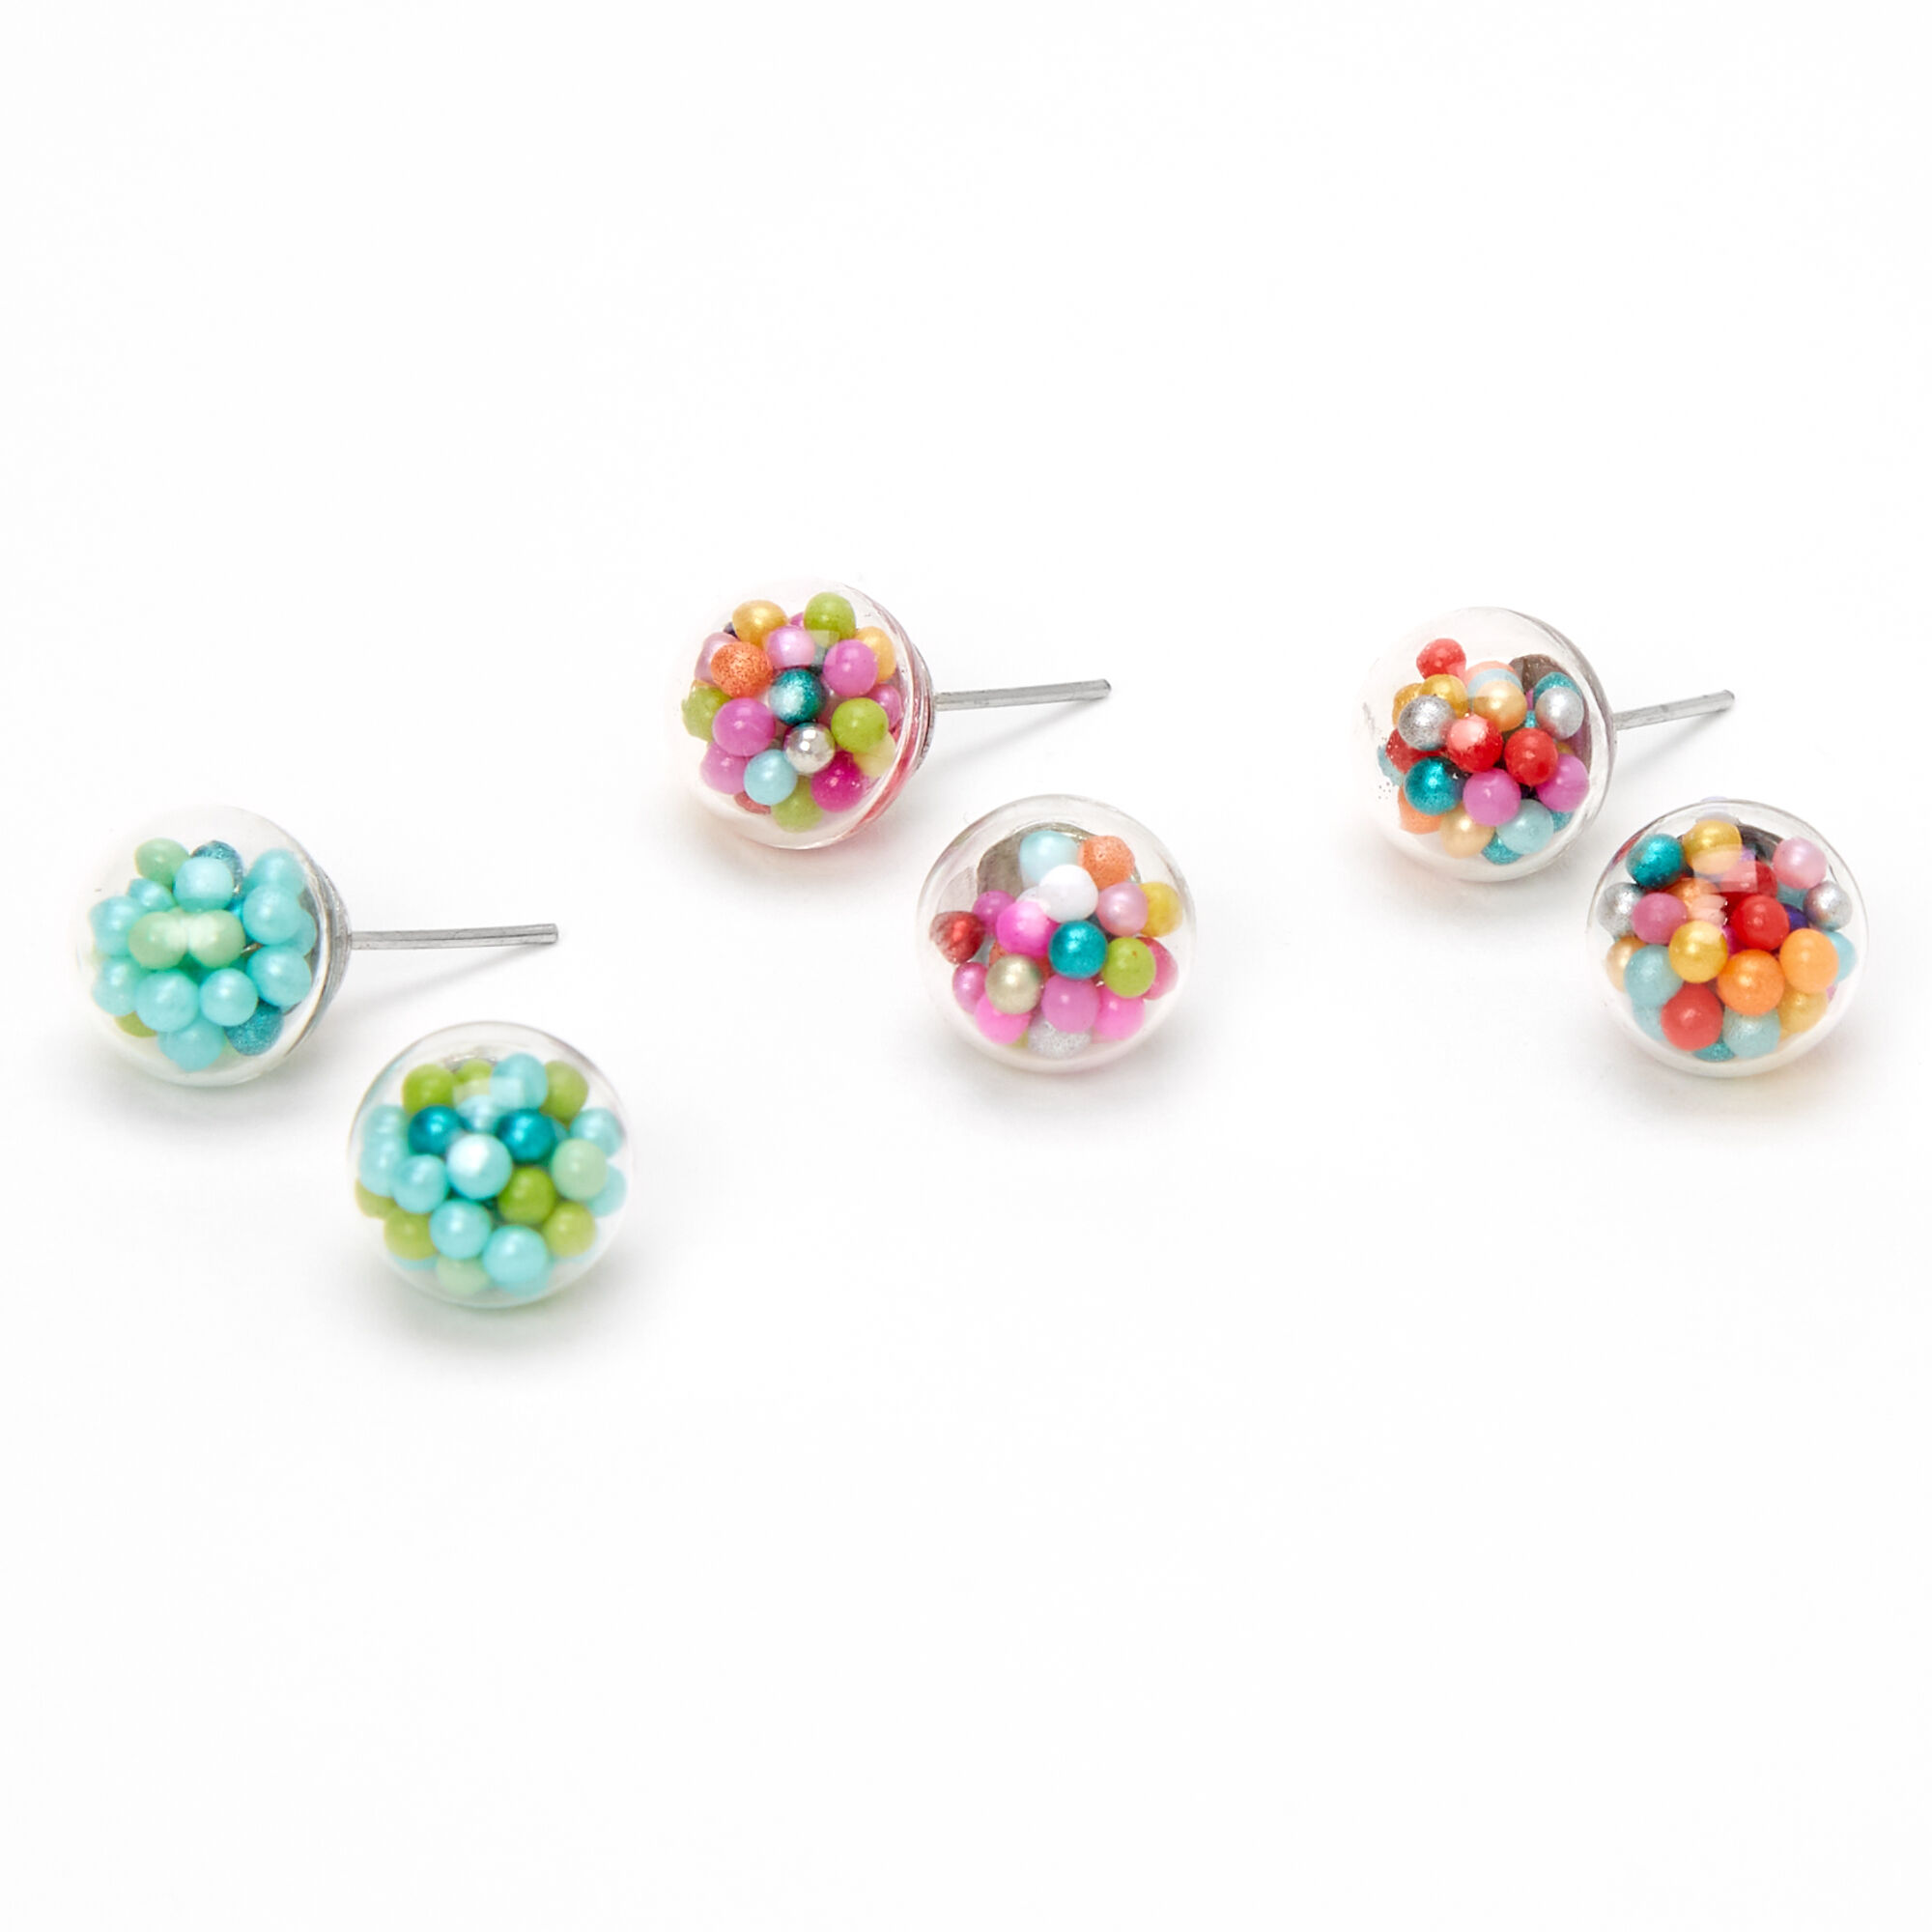 Details 174+ coloured stud earrings latest